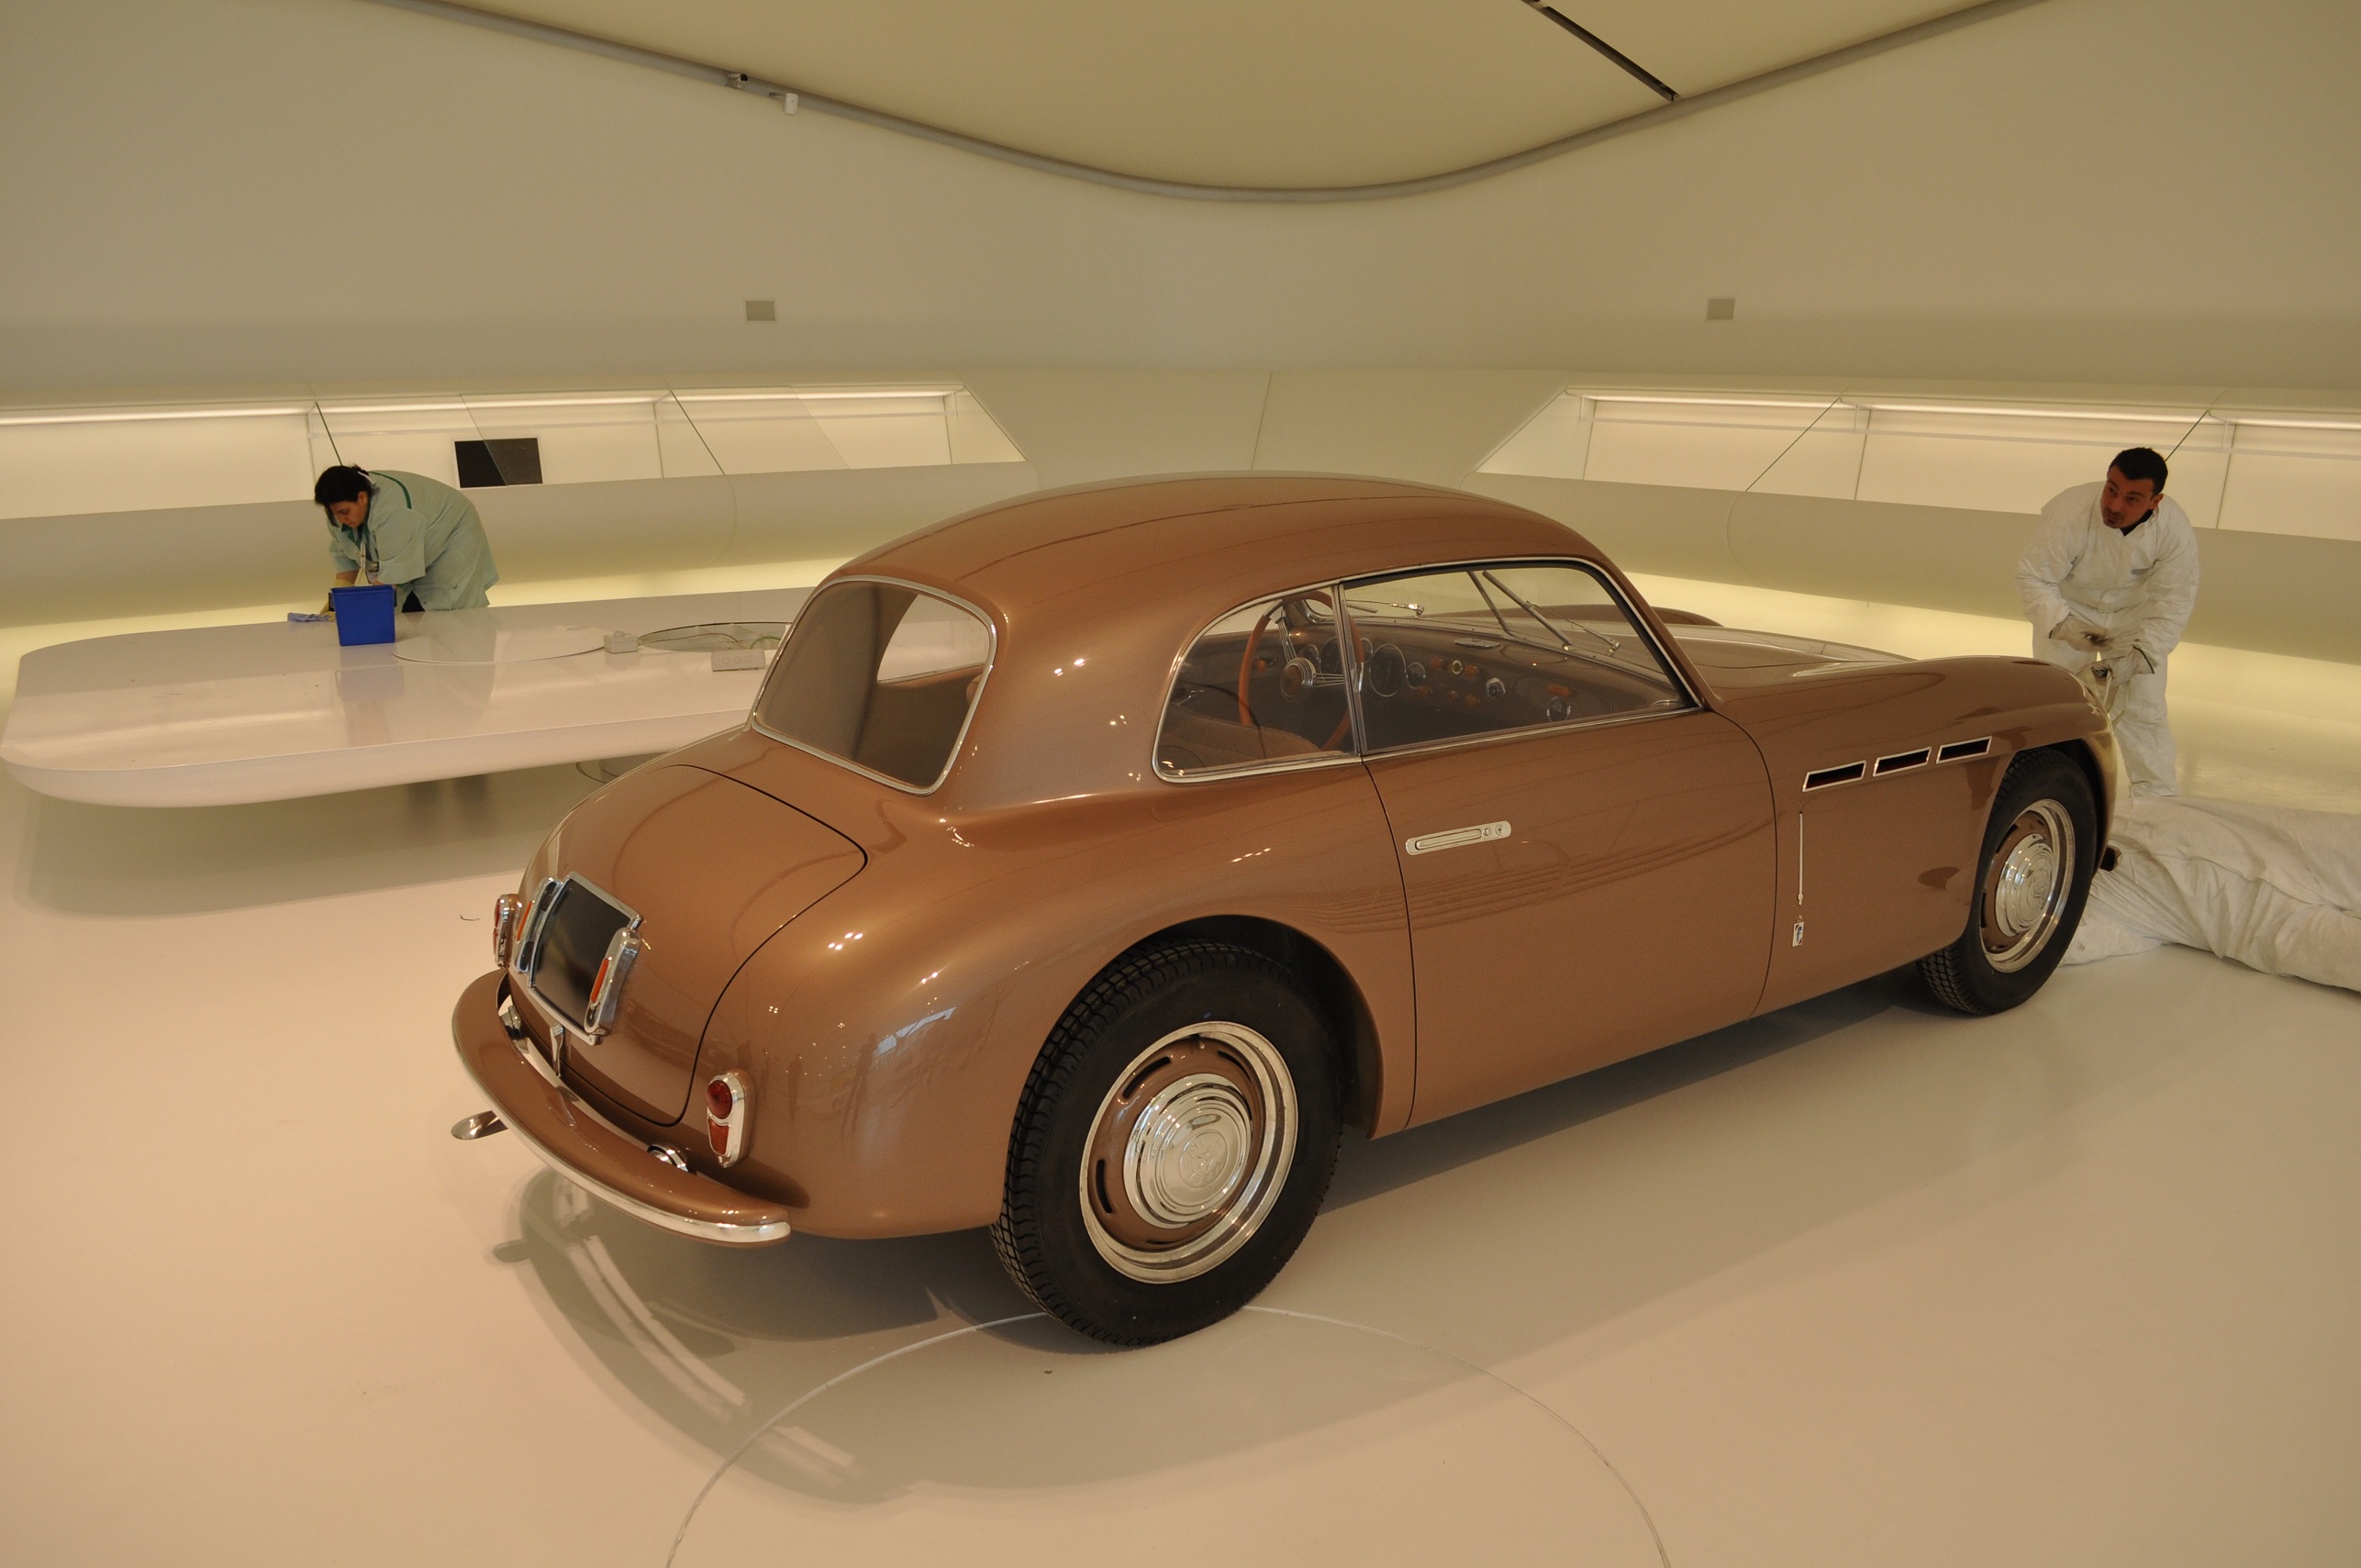 The 1947 Maserati A6 1500 belonging to Museo Nicolis in Villafranca chosen for the Villa d’Este Elegance Contest